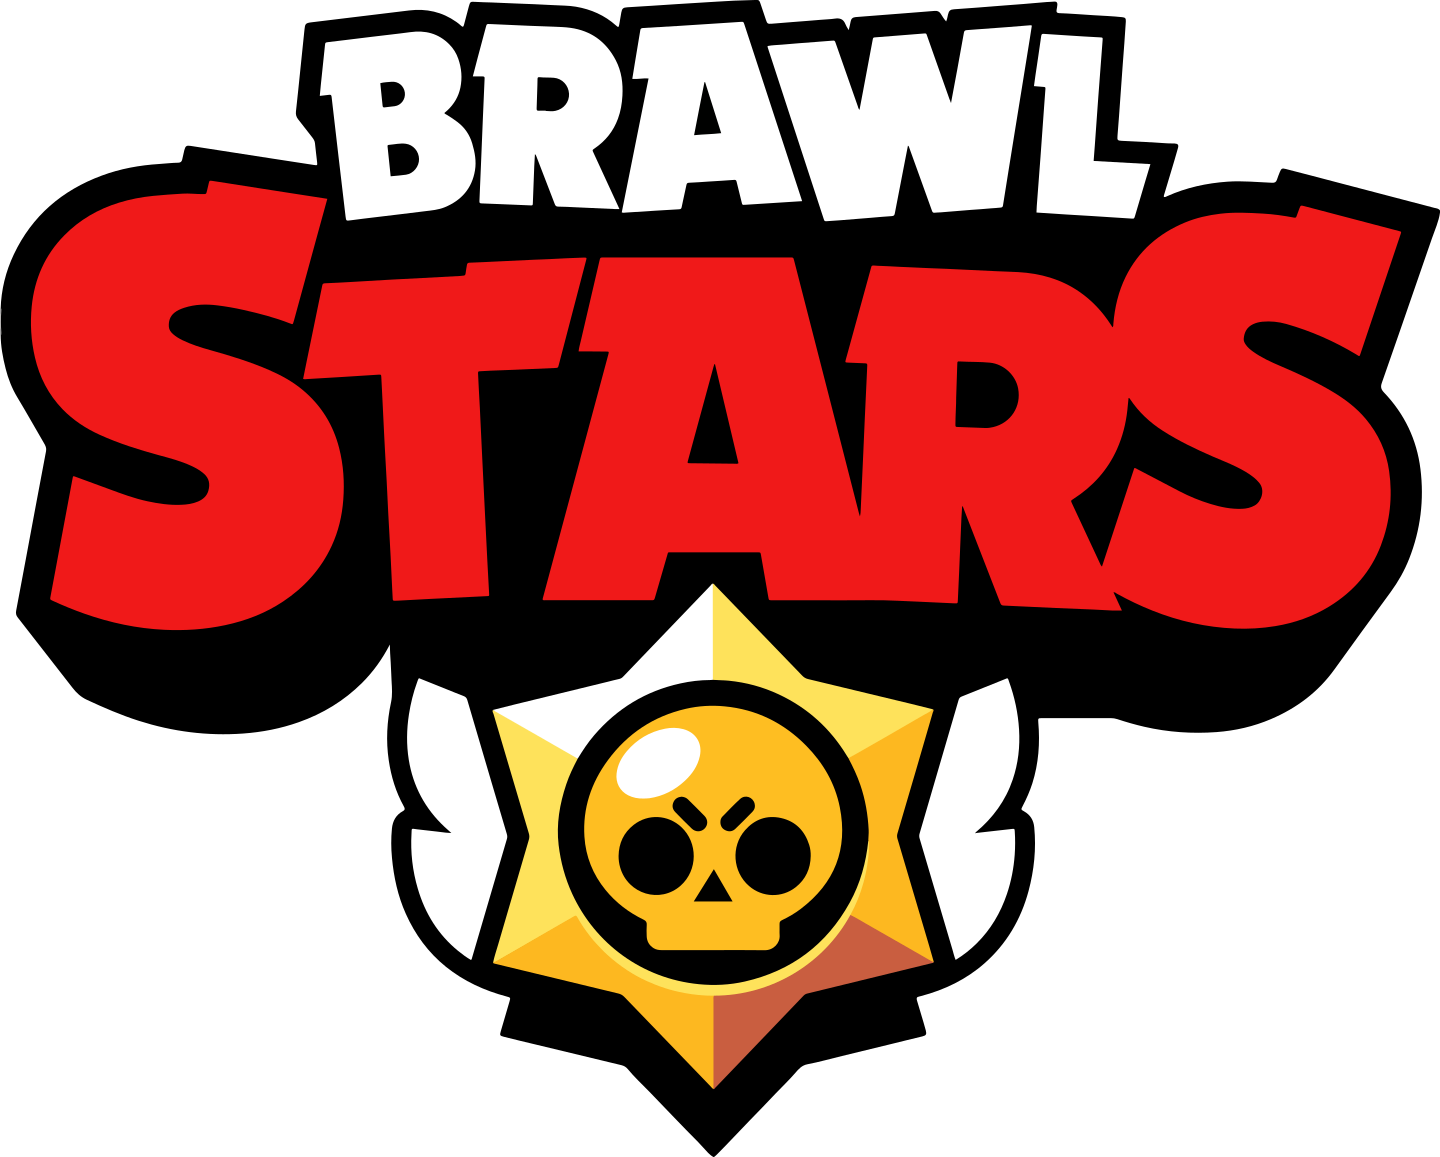 brawl stars logo 2 - Brawl Stars Logo